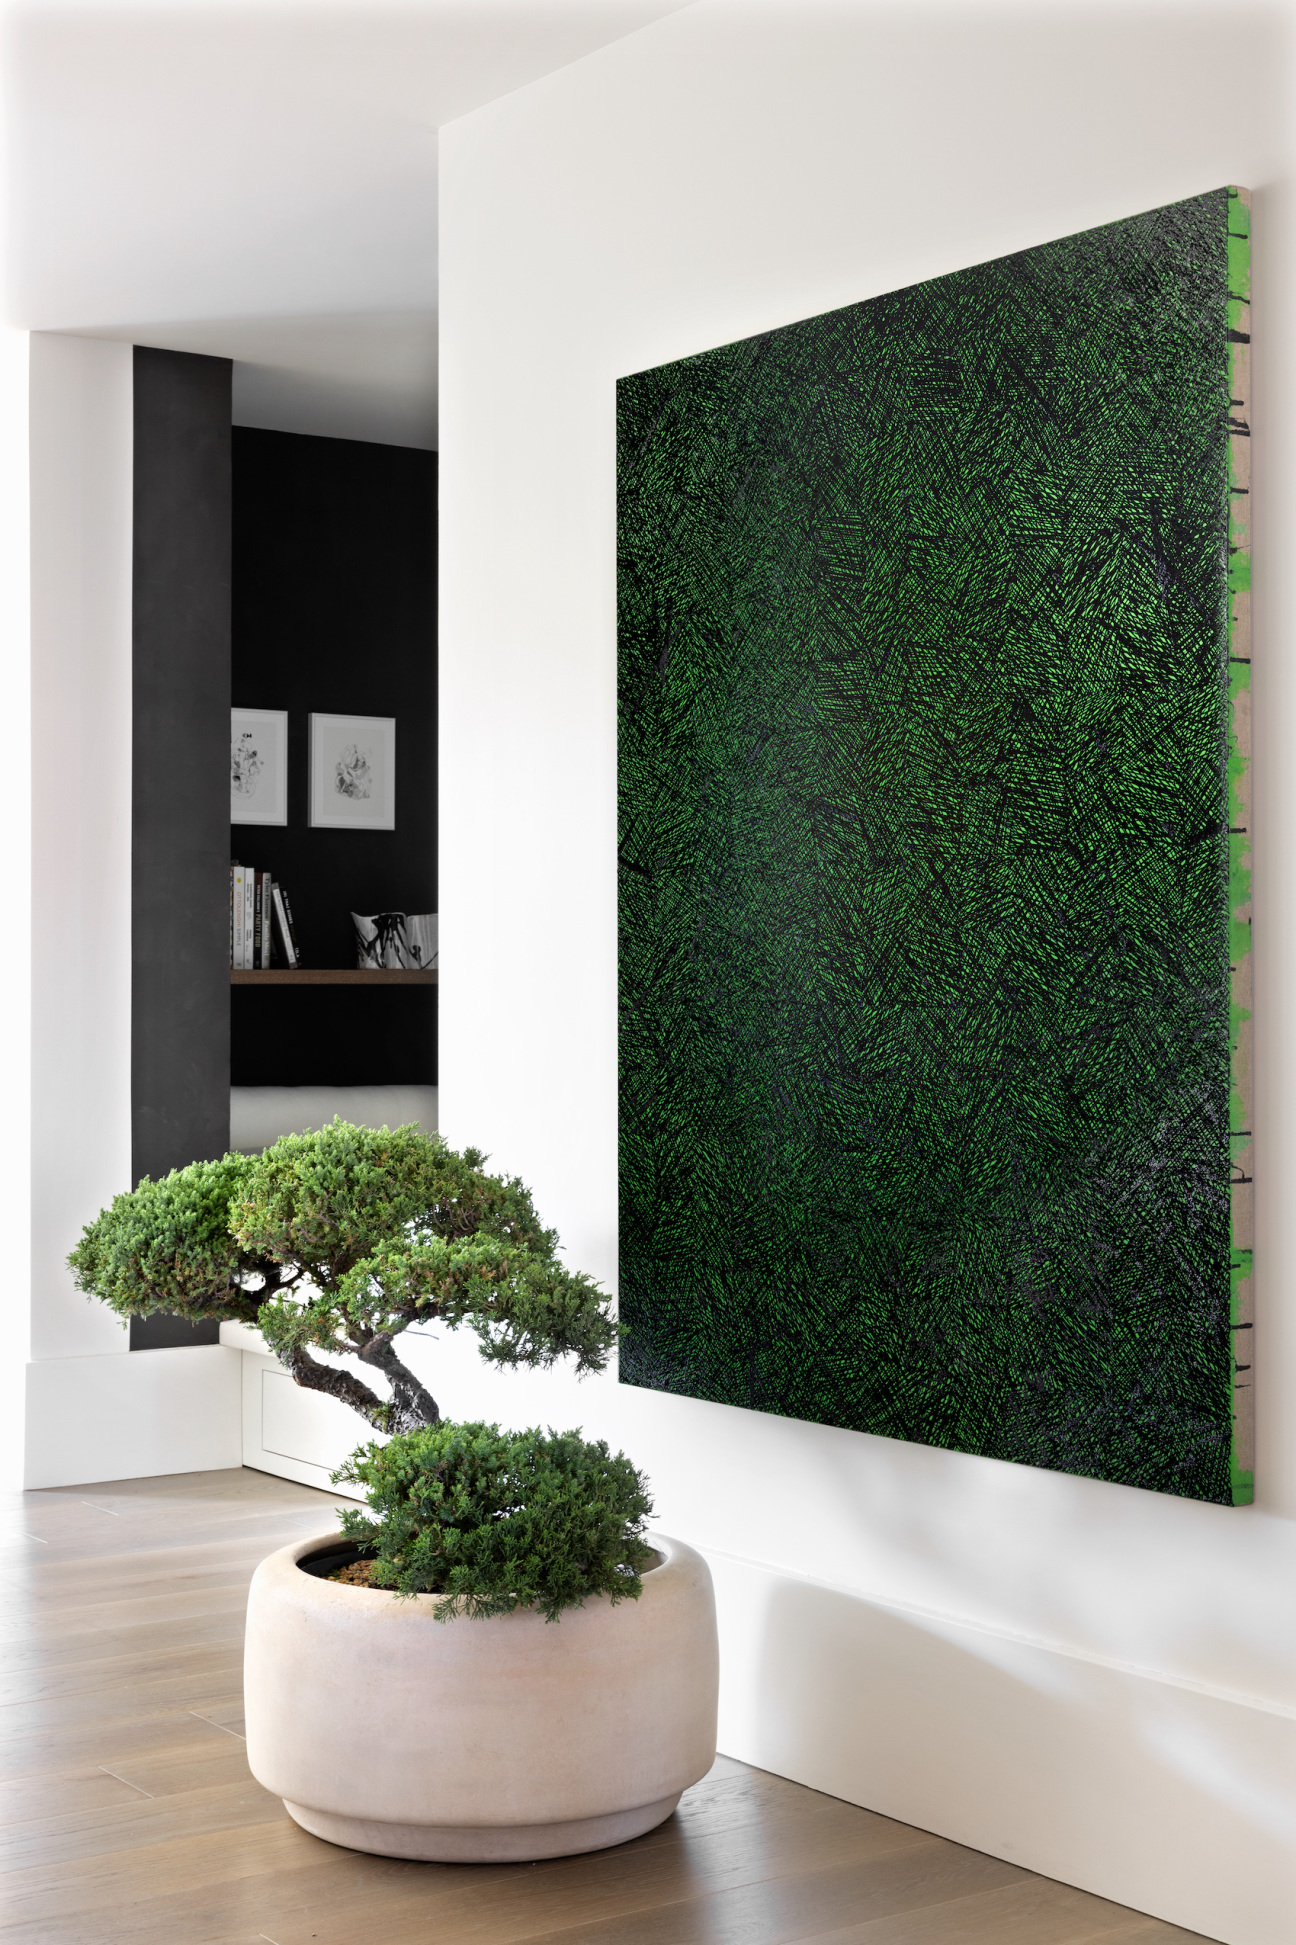 painting hangs in hallway space next to bonsai tree